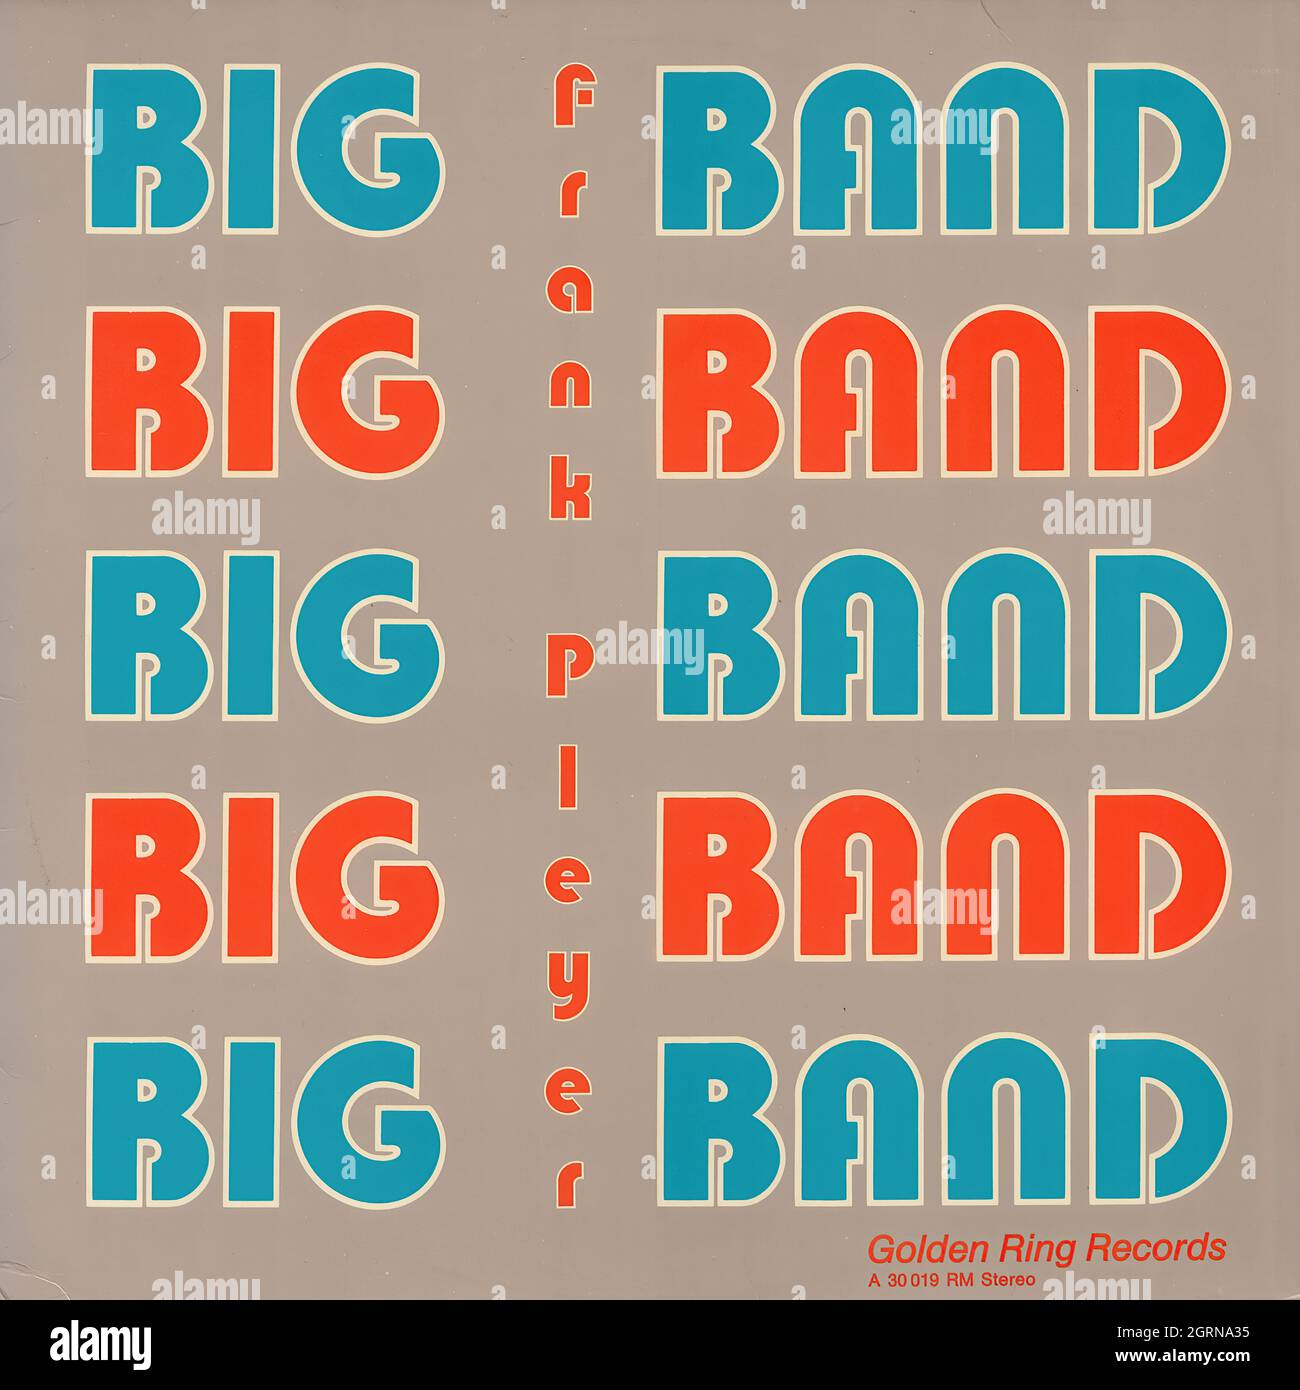 Big Band Frank Pleyer - Vintage Vinyl Record Cover Stock Photo